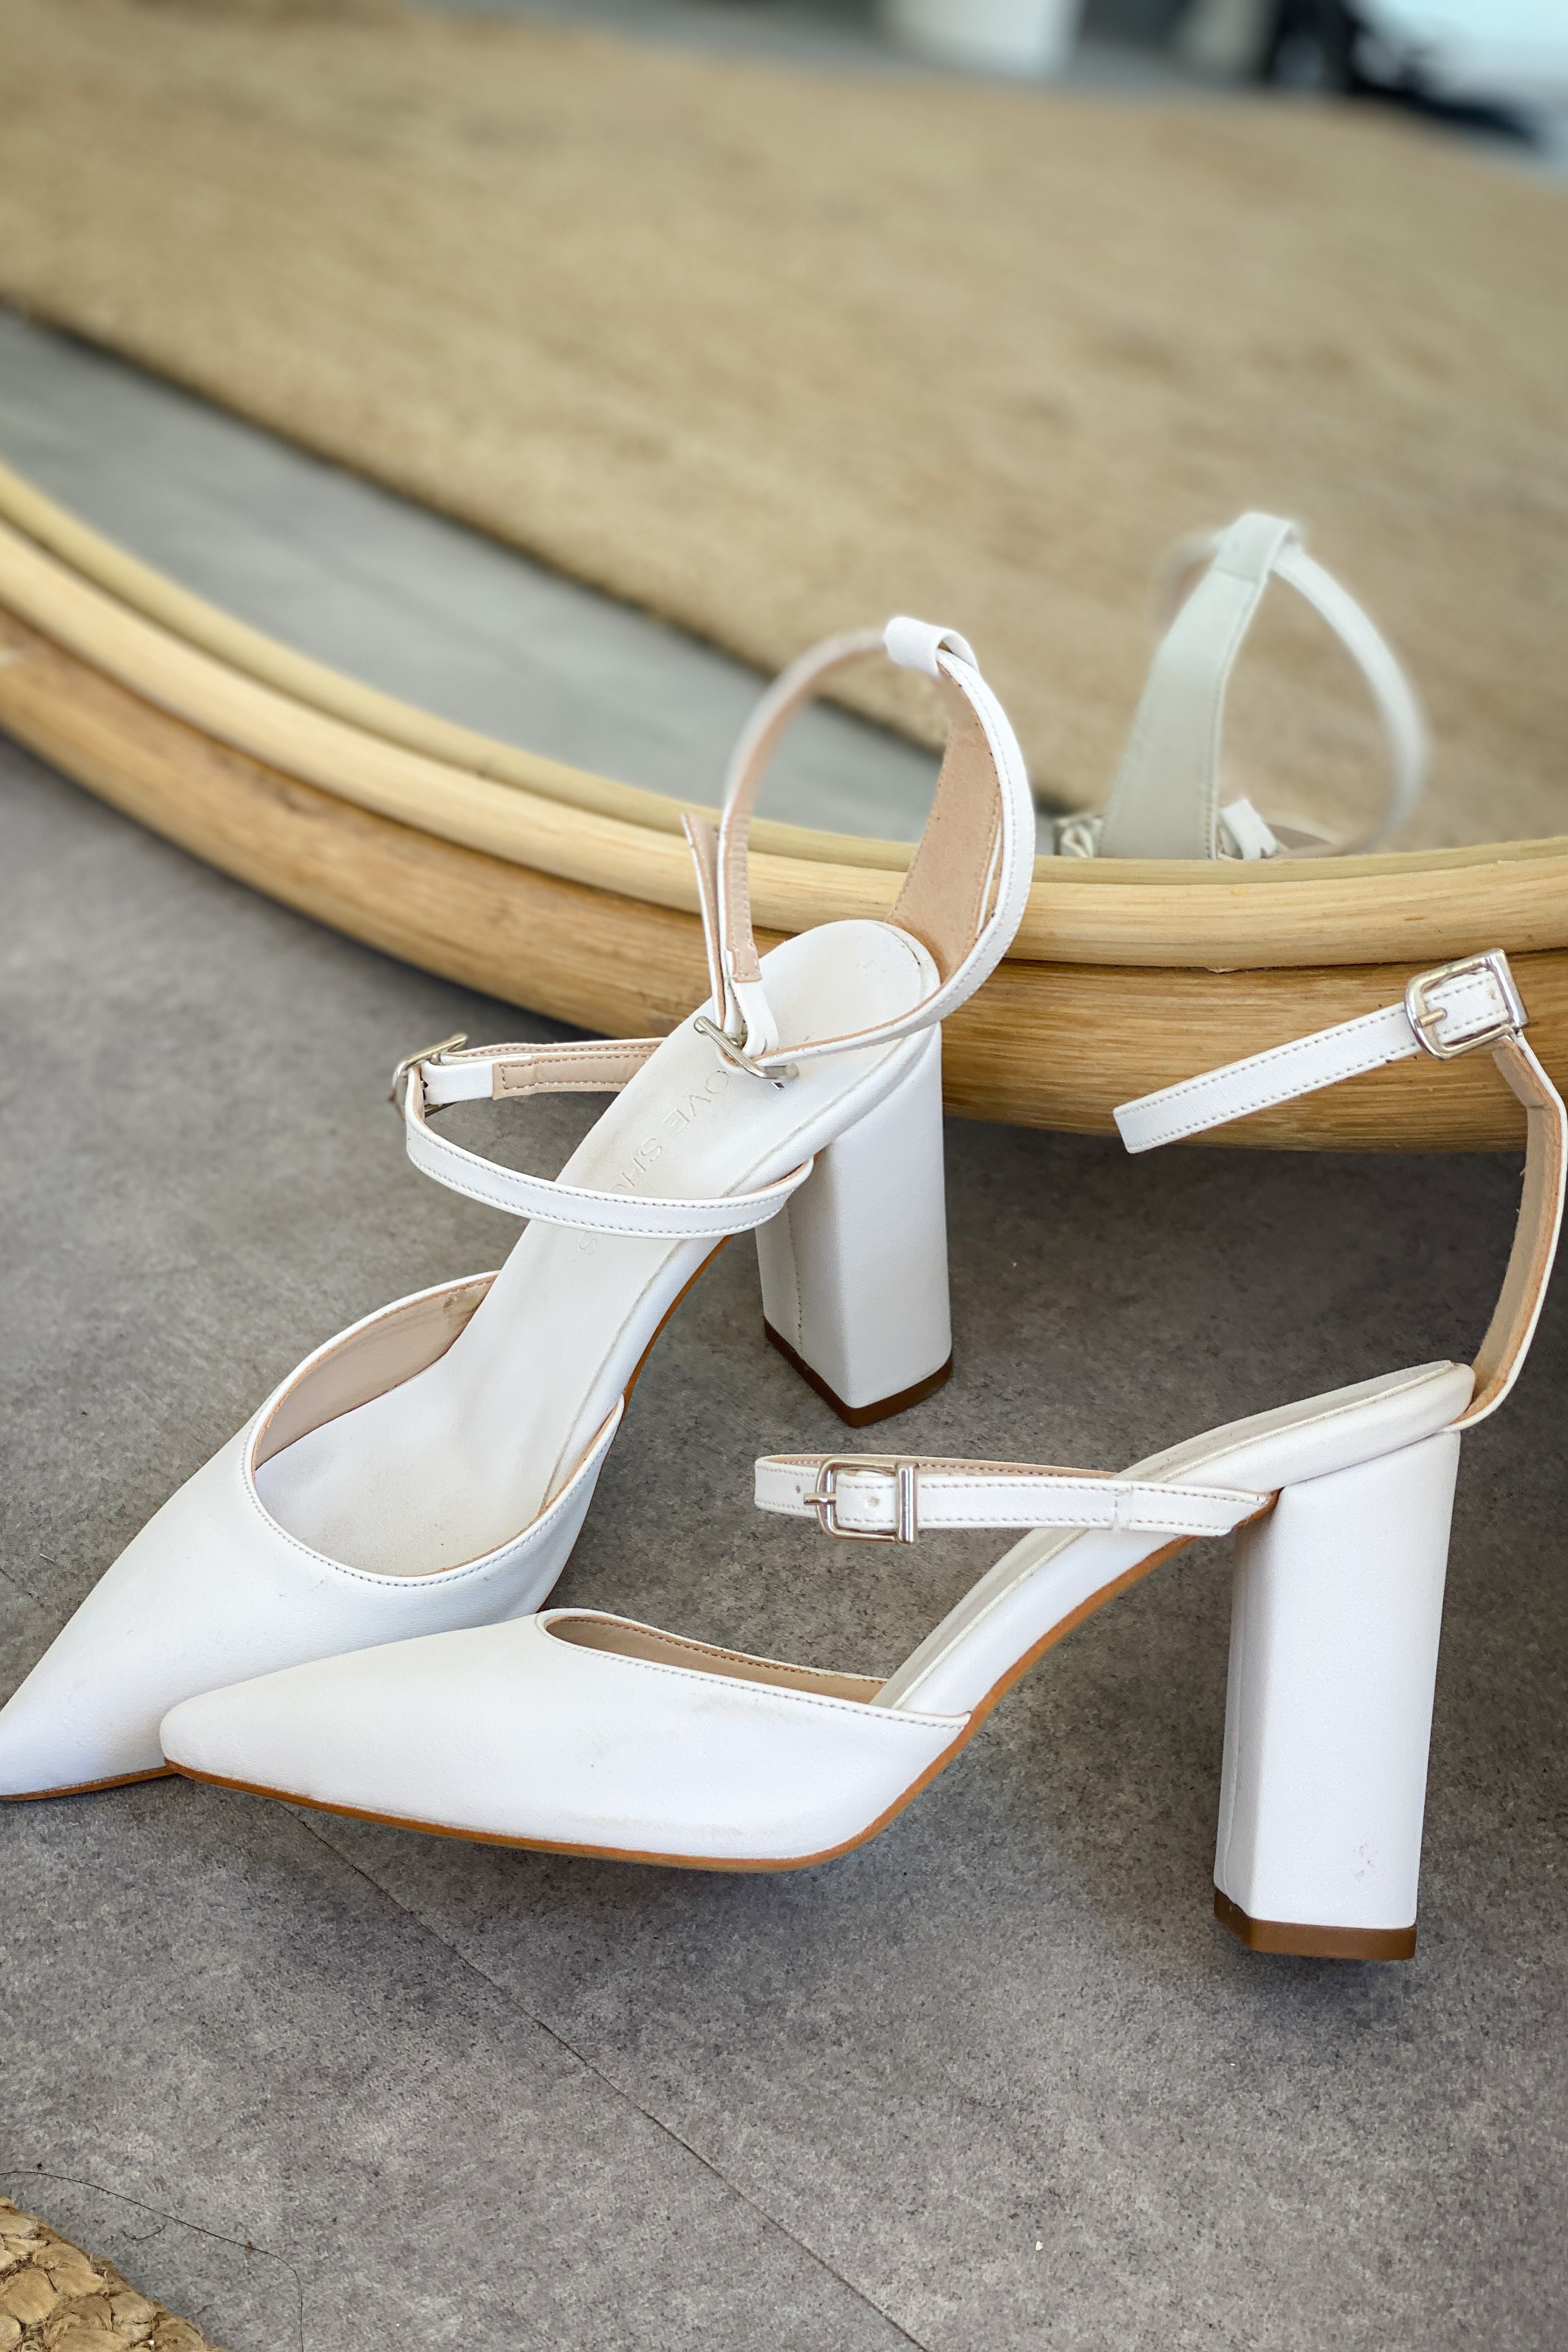 Olenpa matte leather high heeled shoes white